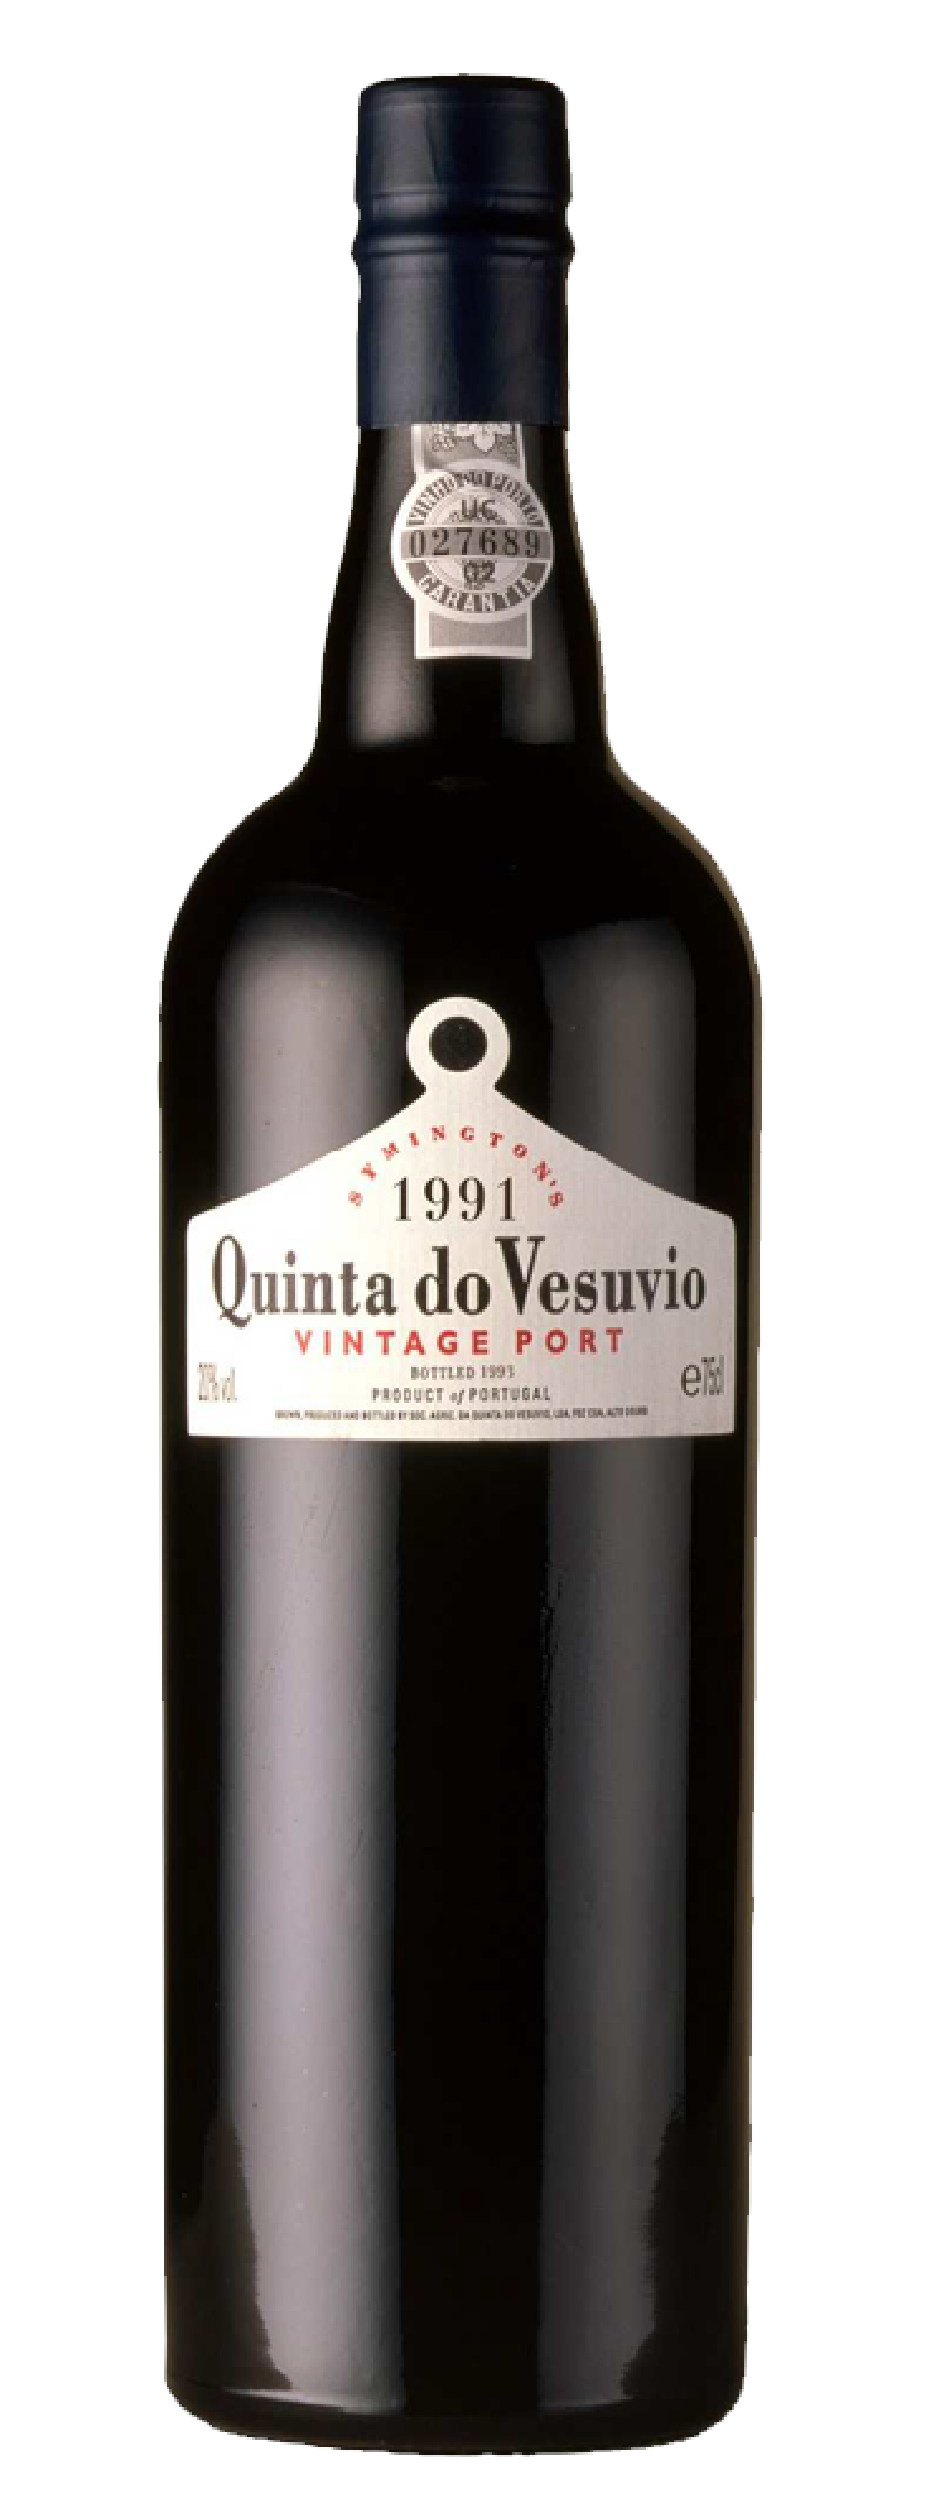 Product Image for QUINTA DO VESUVIO VINTAGE PORT 1991 - MAGNUM